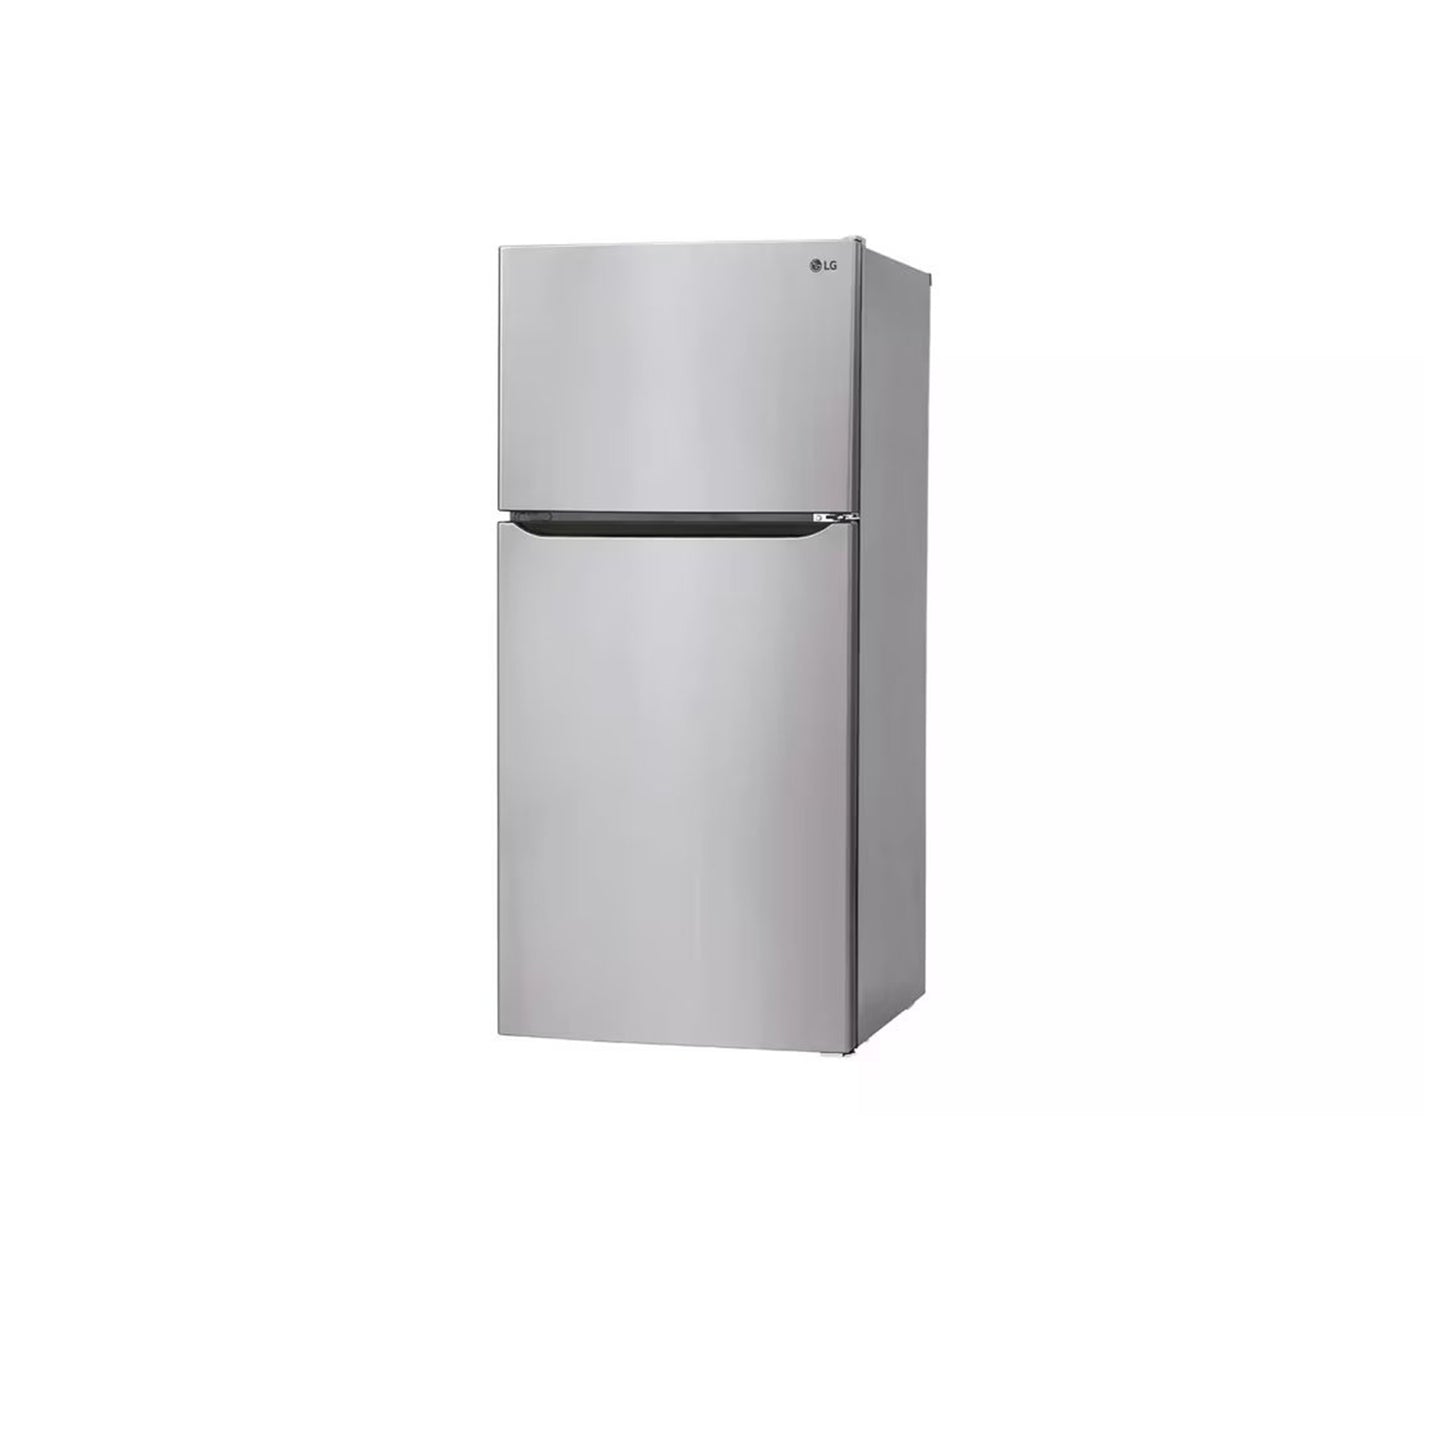 11 cu. ft. Top Freezer Refrigerator